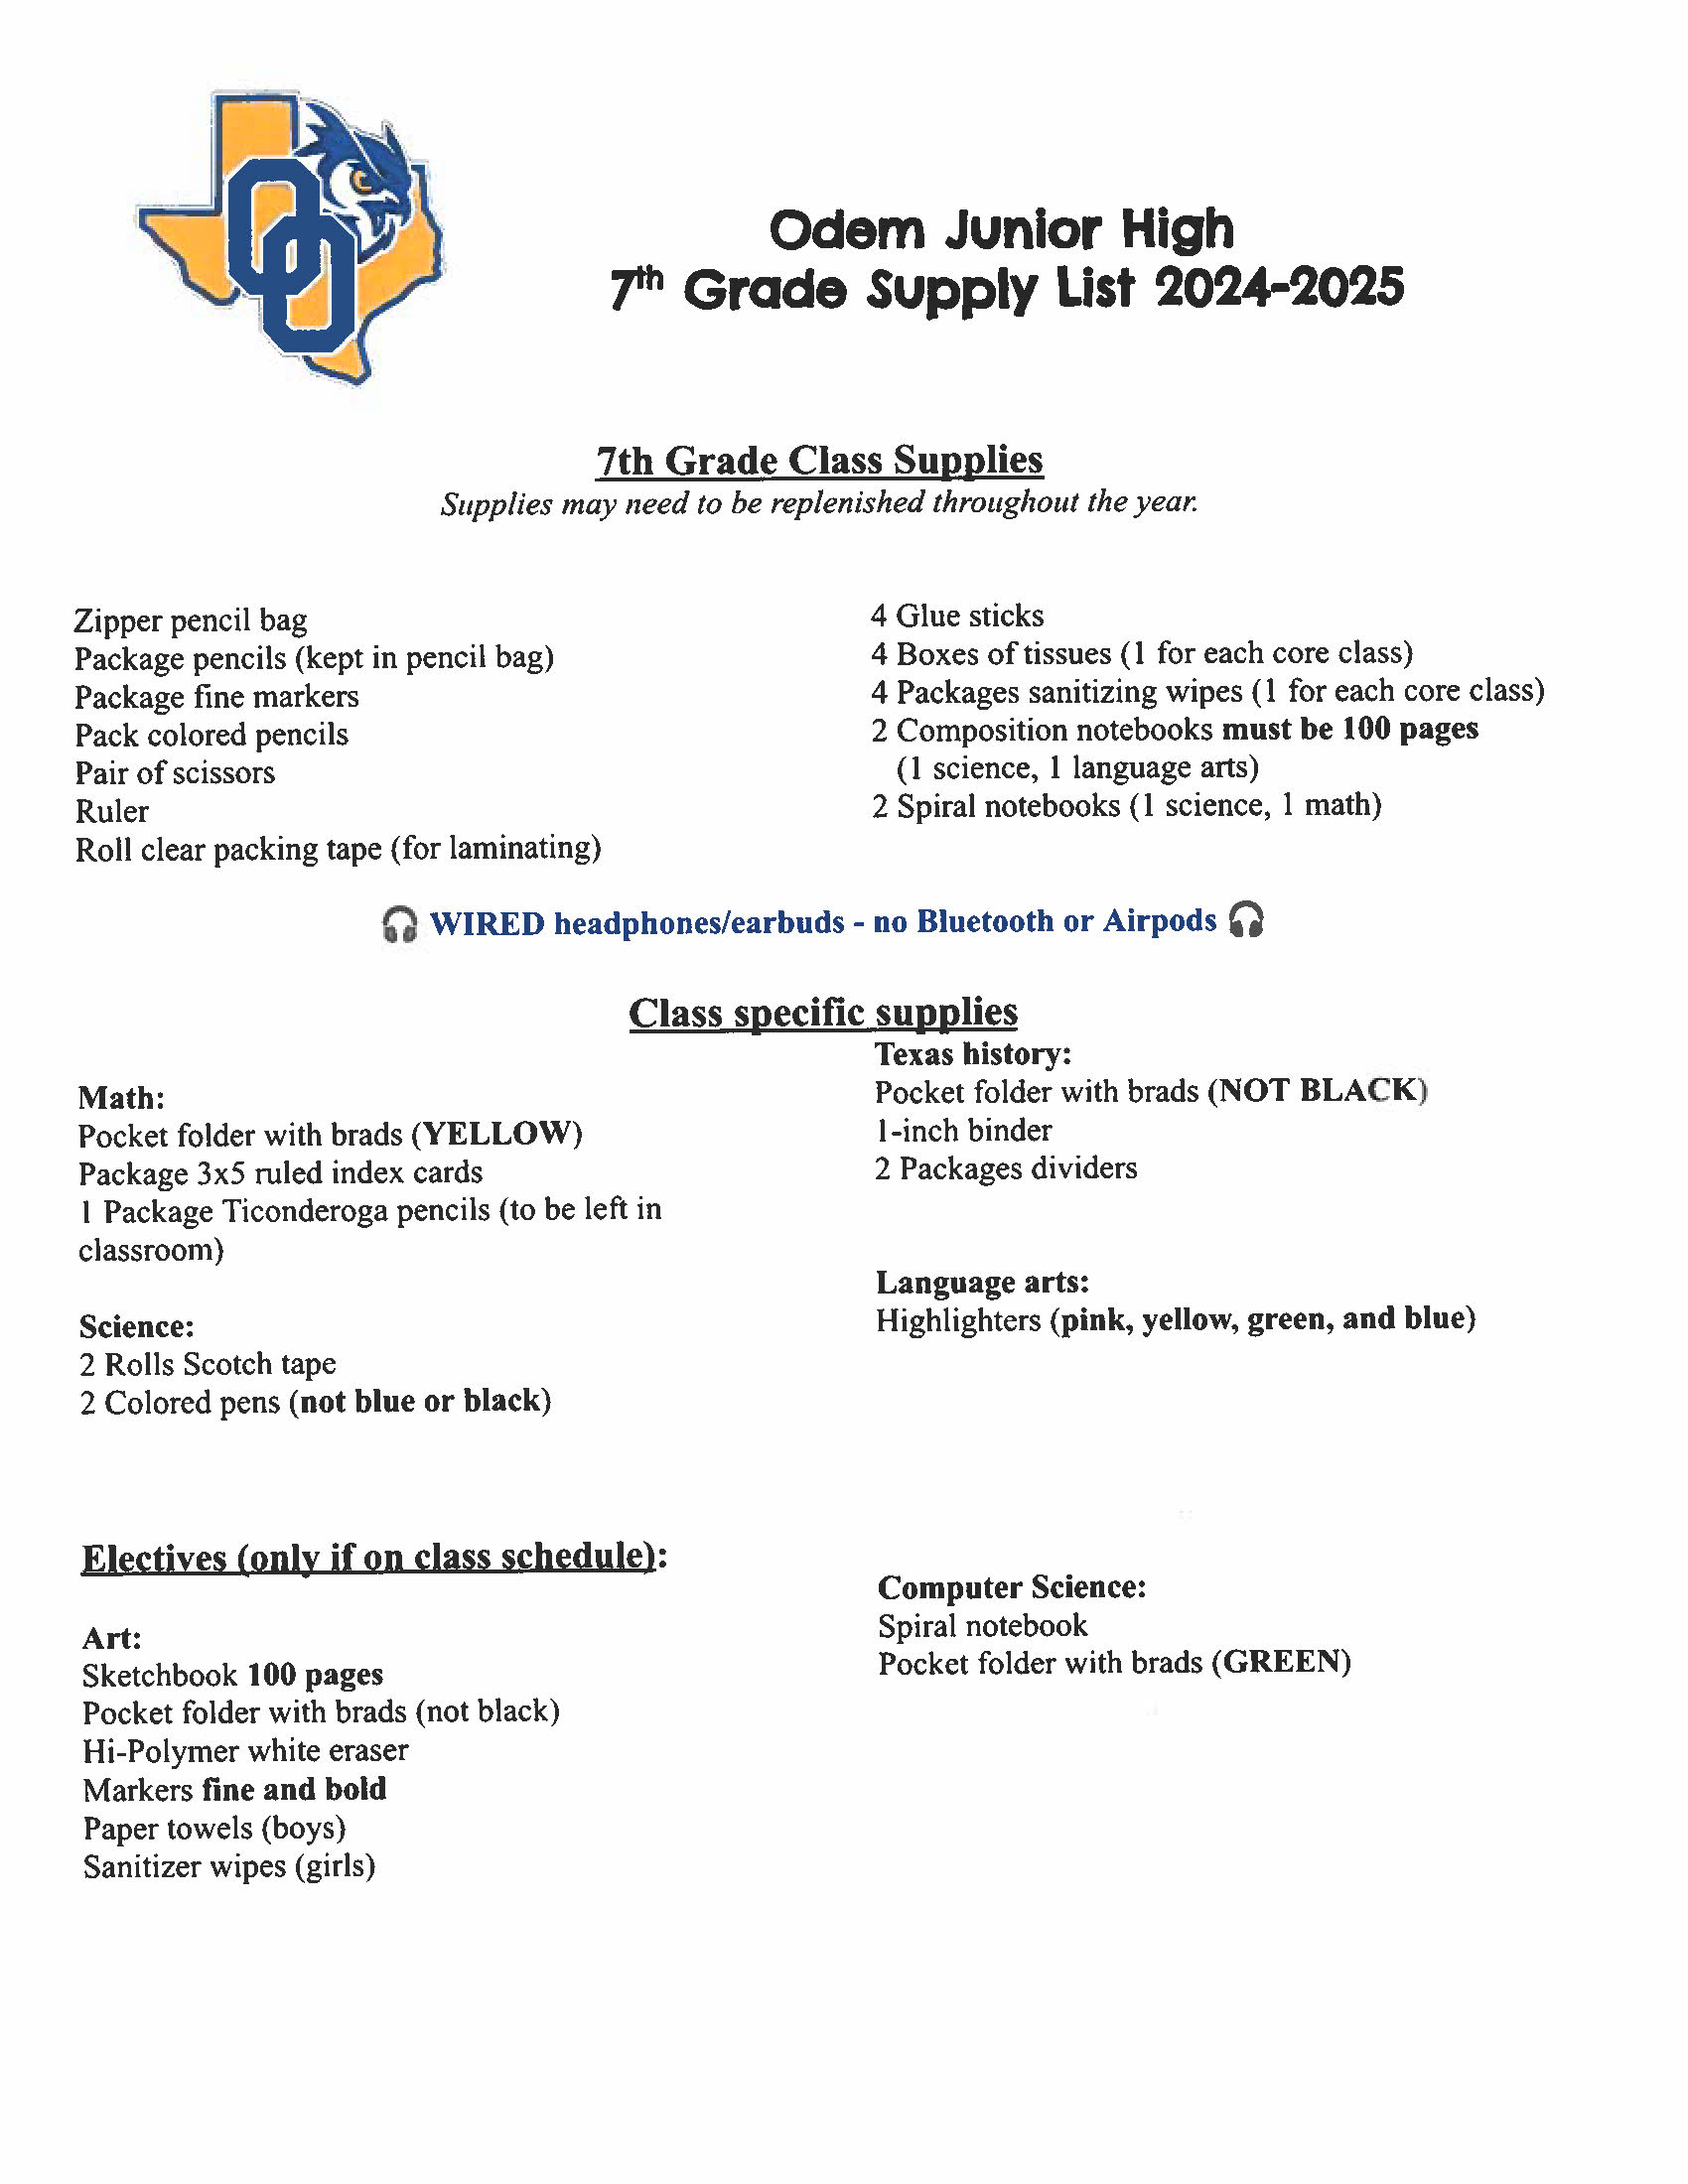 OJH 7th Grade School Supplies List